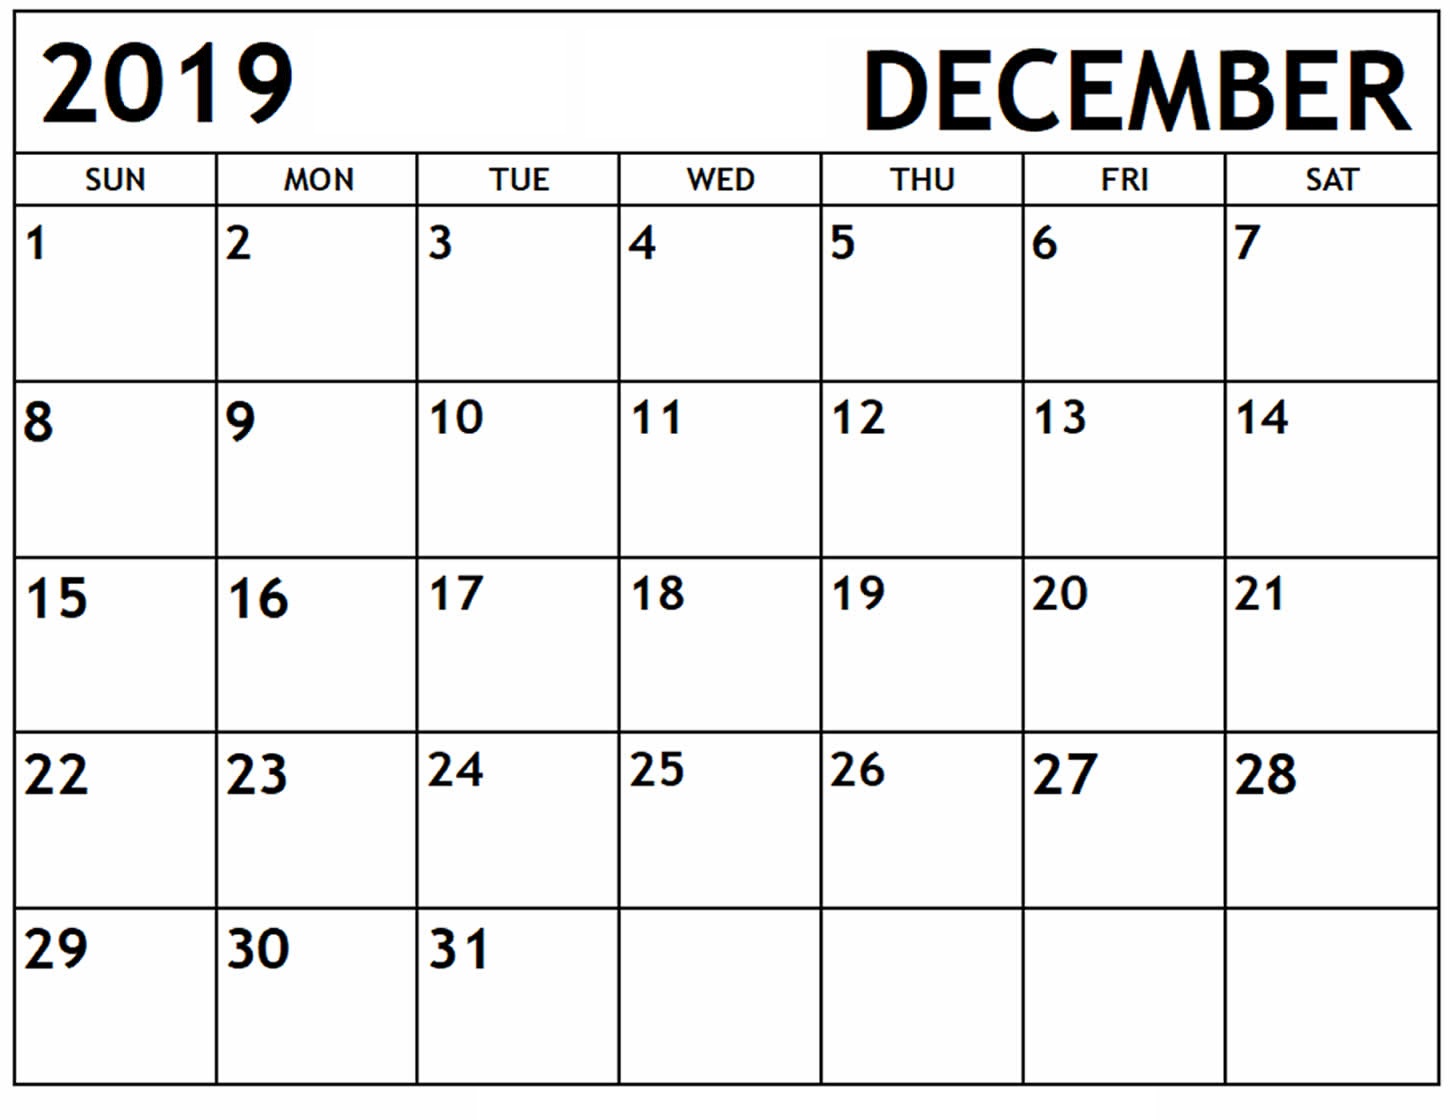 December 2019 Calendar Printable